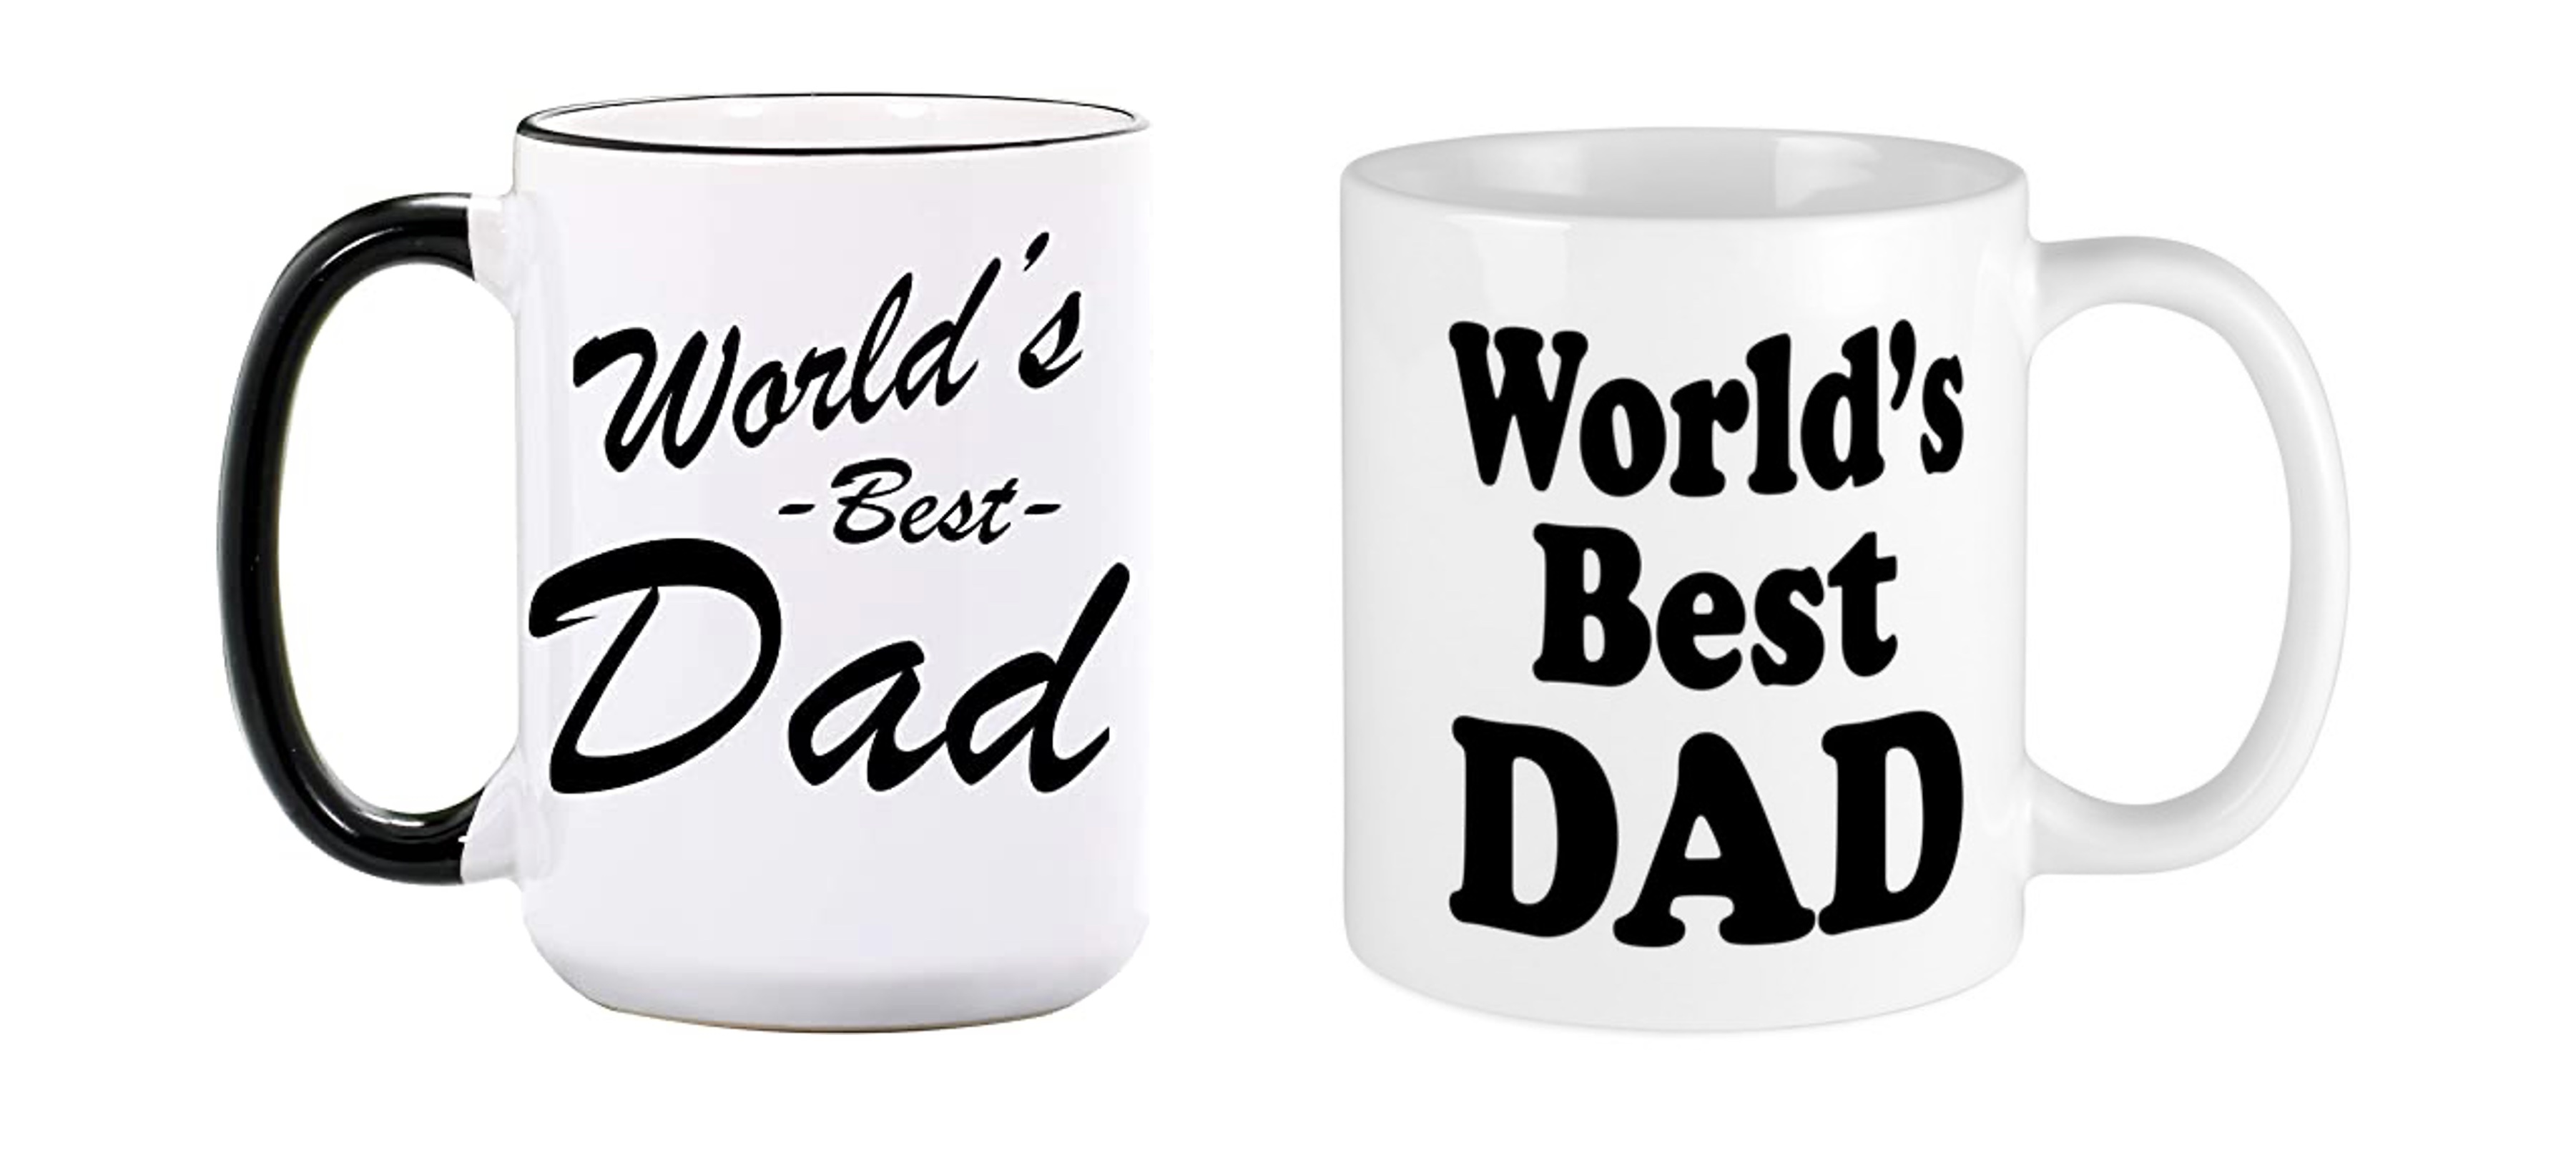 World's best dad mug